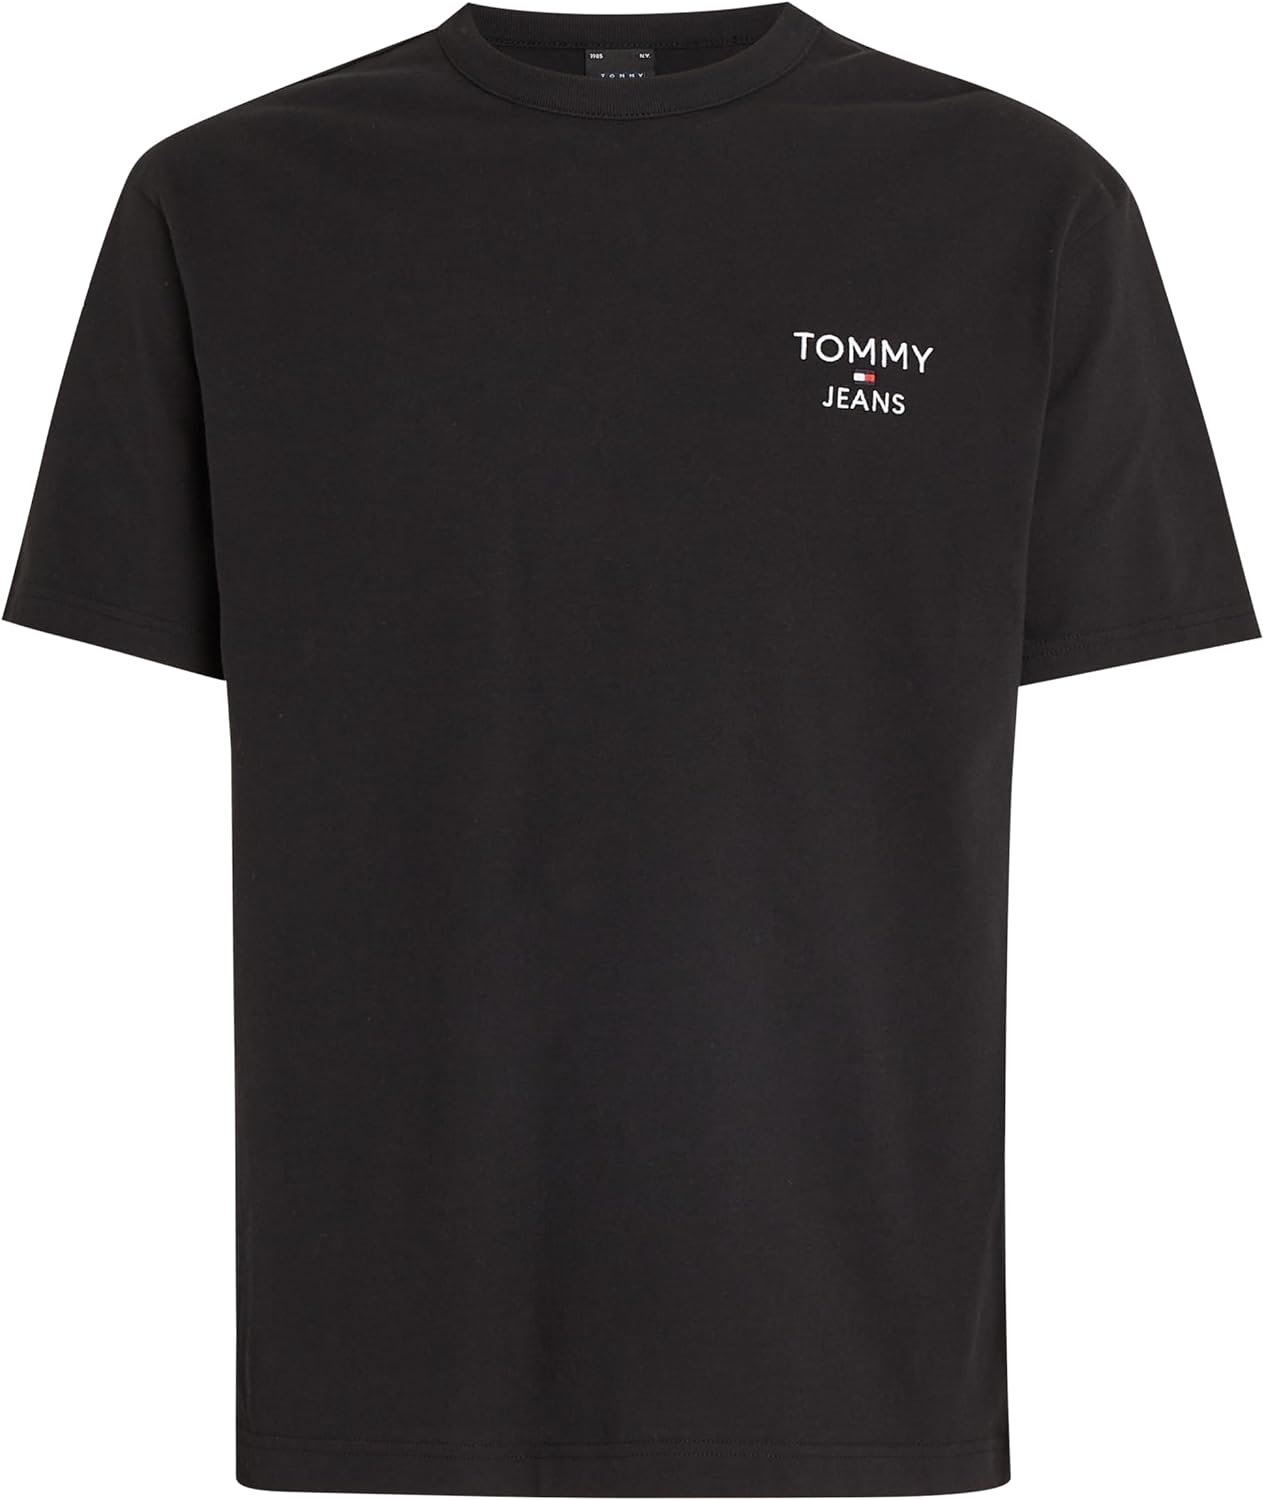 TOMMY HILFIGER T-shirt Uomo - Nero modello DM0DM18872